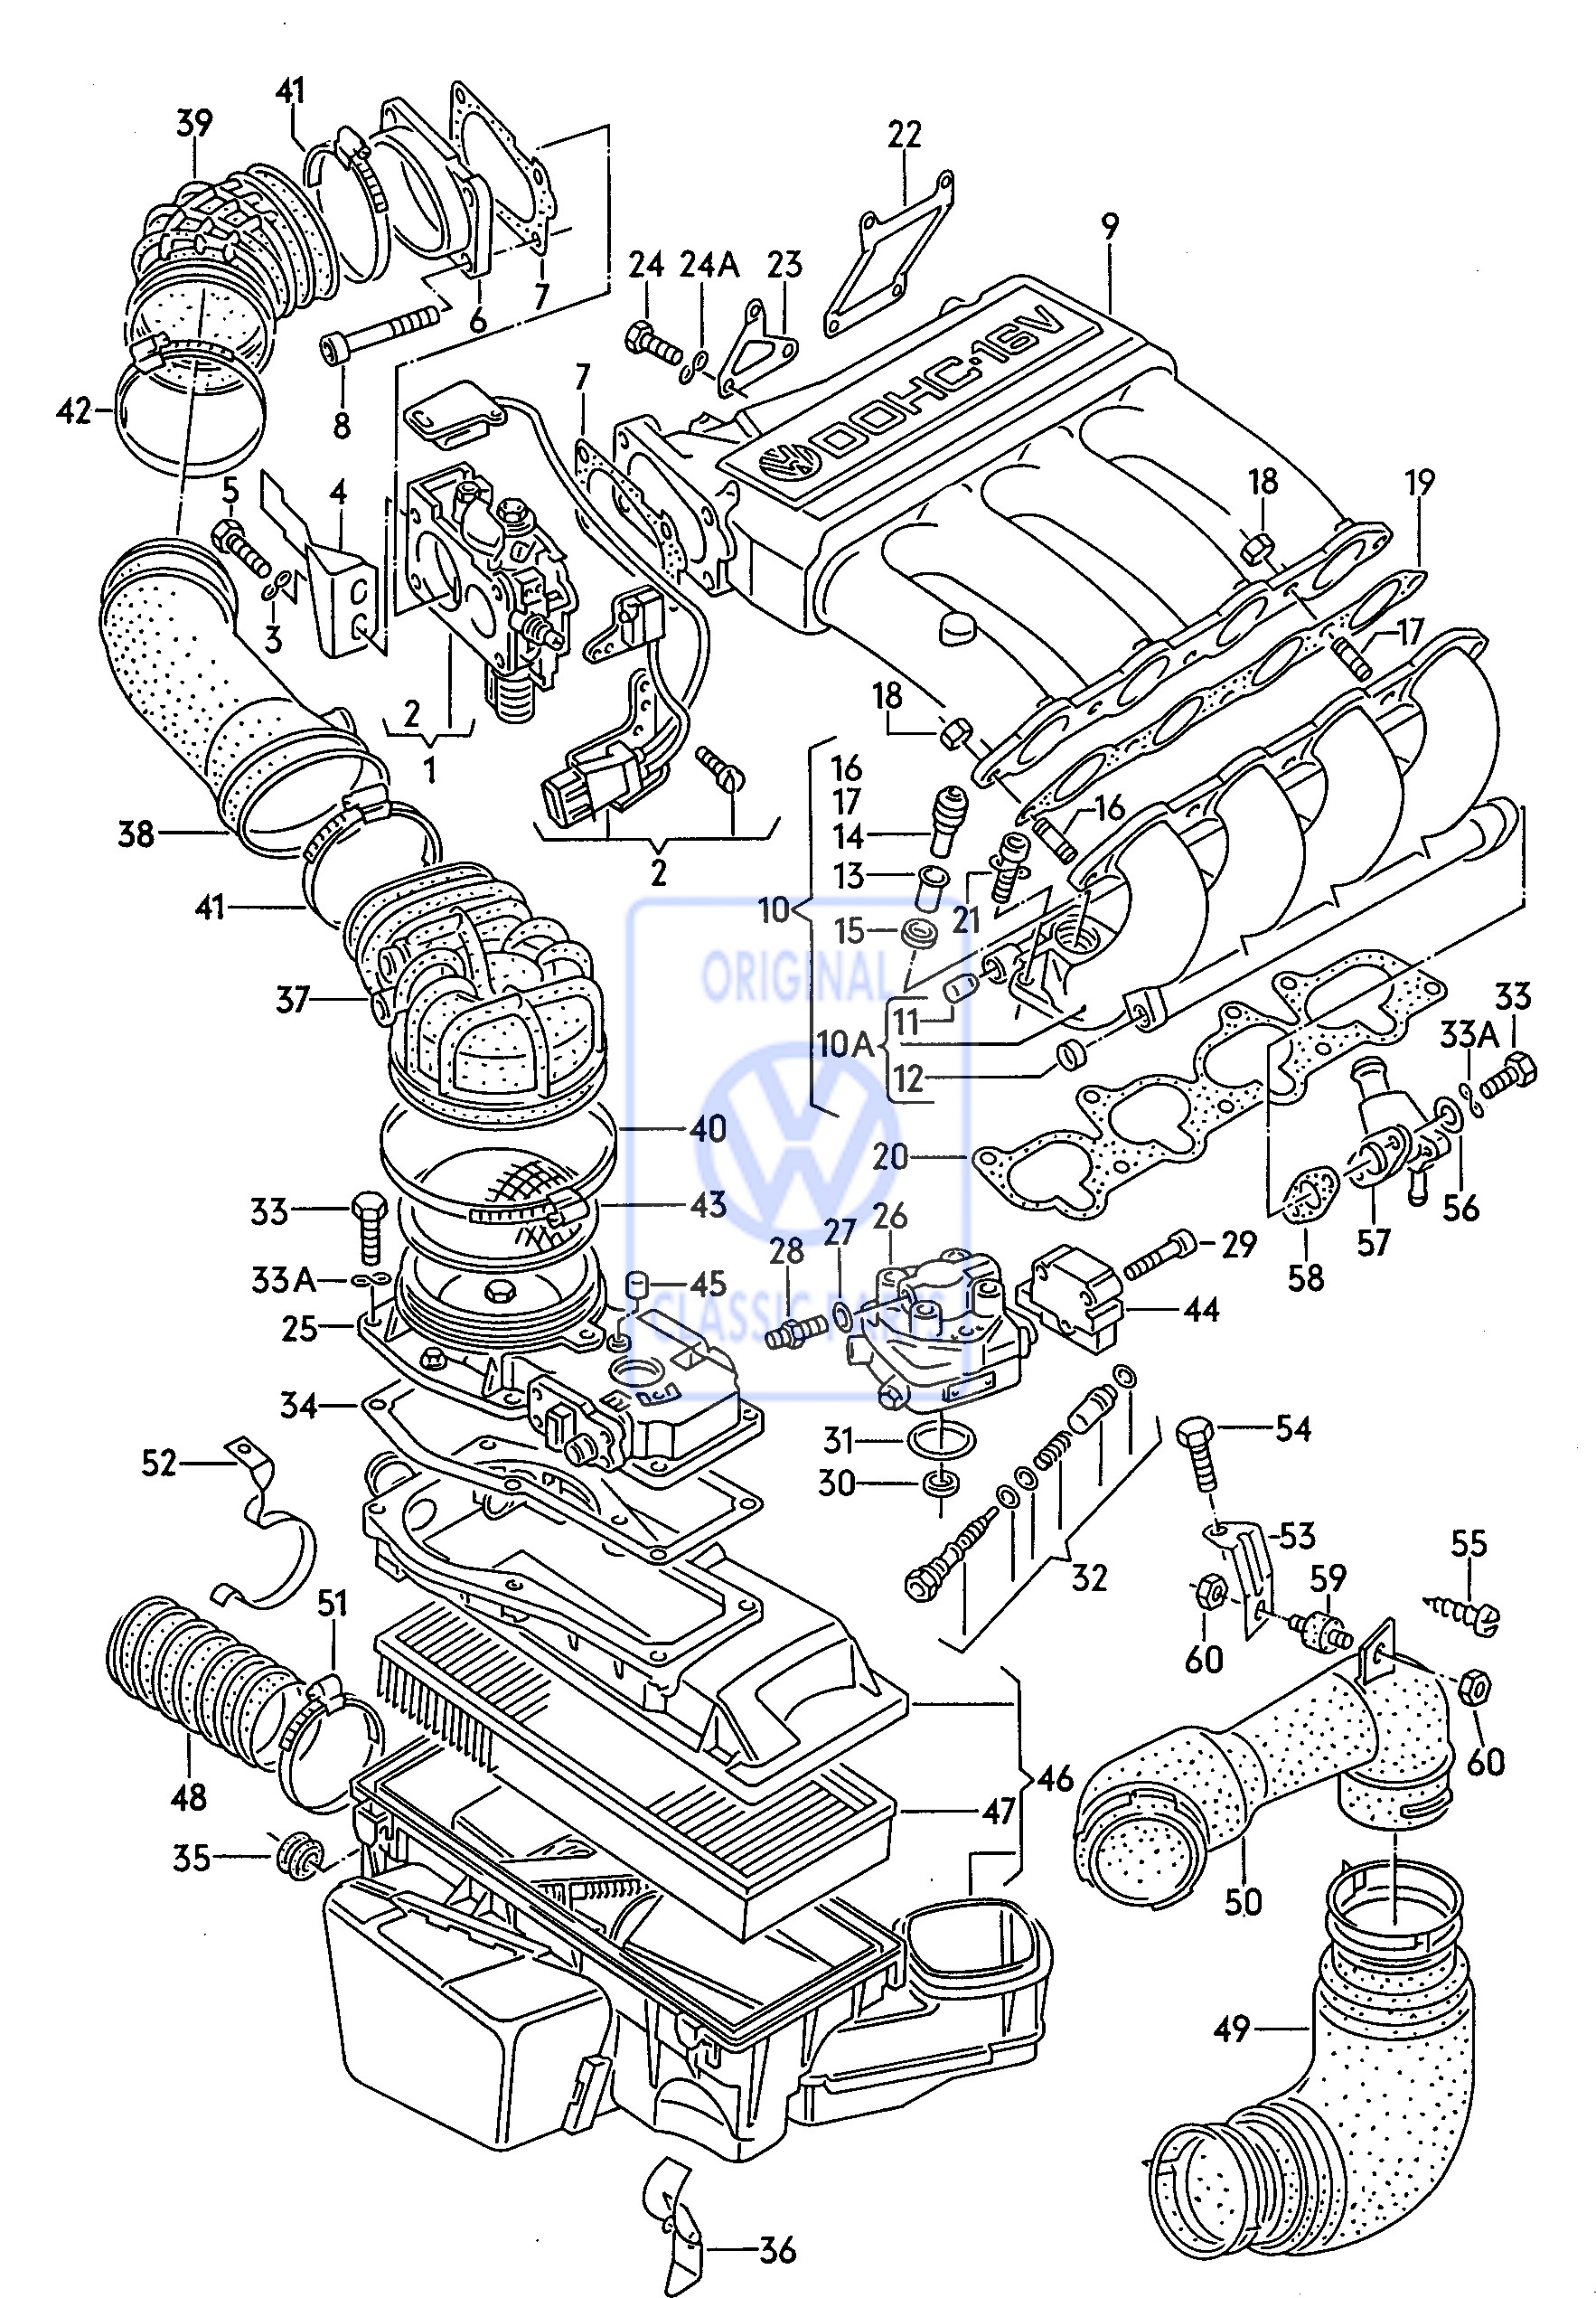 Diagram Of the Chrysler 3,8 Litre Engine Dohc 16v Kia Motor Diagram Full Hd Version Motor Diagram Of Diagram Of the Chrysler 3,8 Litre Engine